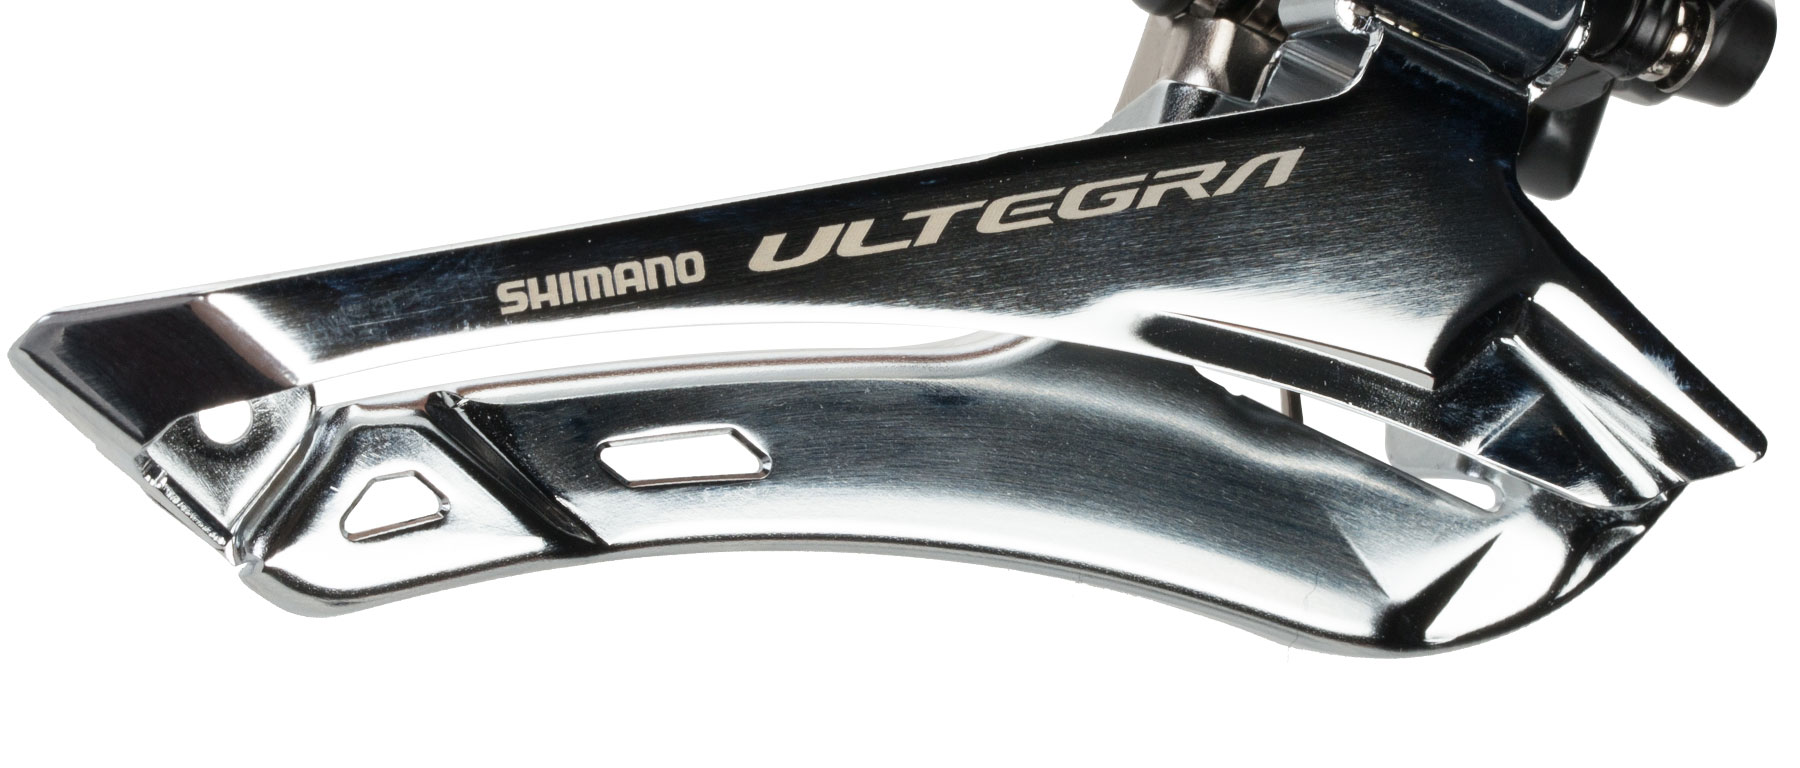 Shimano Ultegra FD-R8050 Di2 Front Derailleur